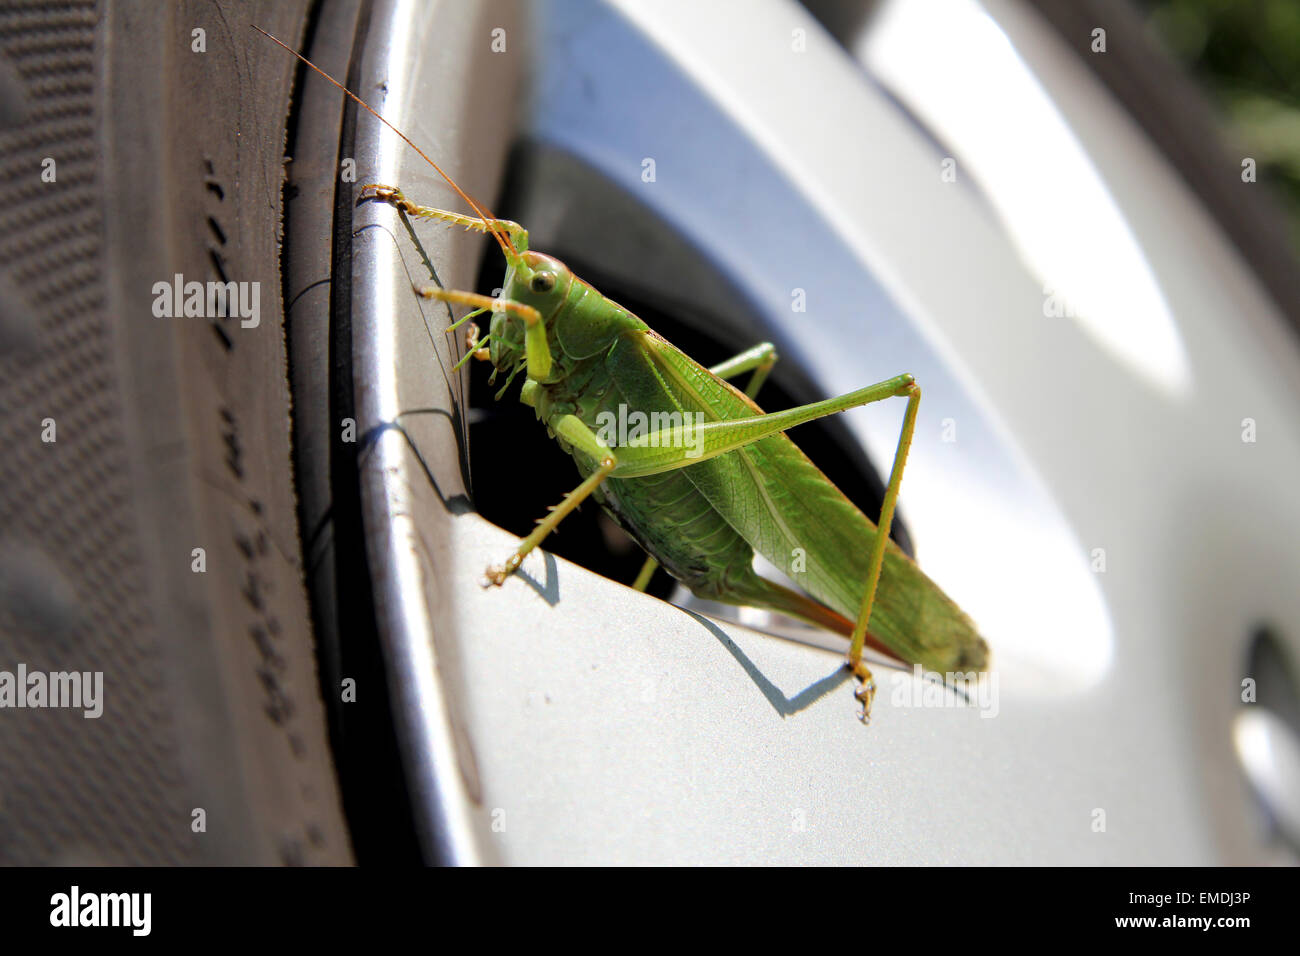 Grasshopper on car wheel Stock Photo